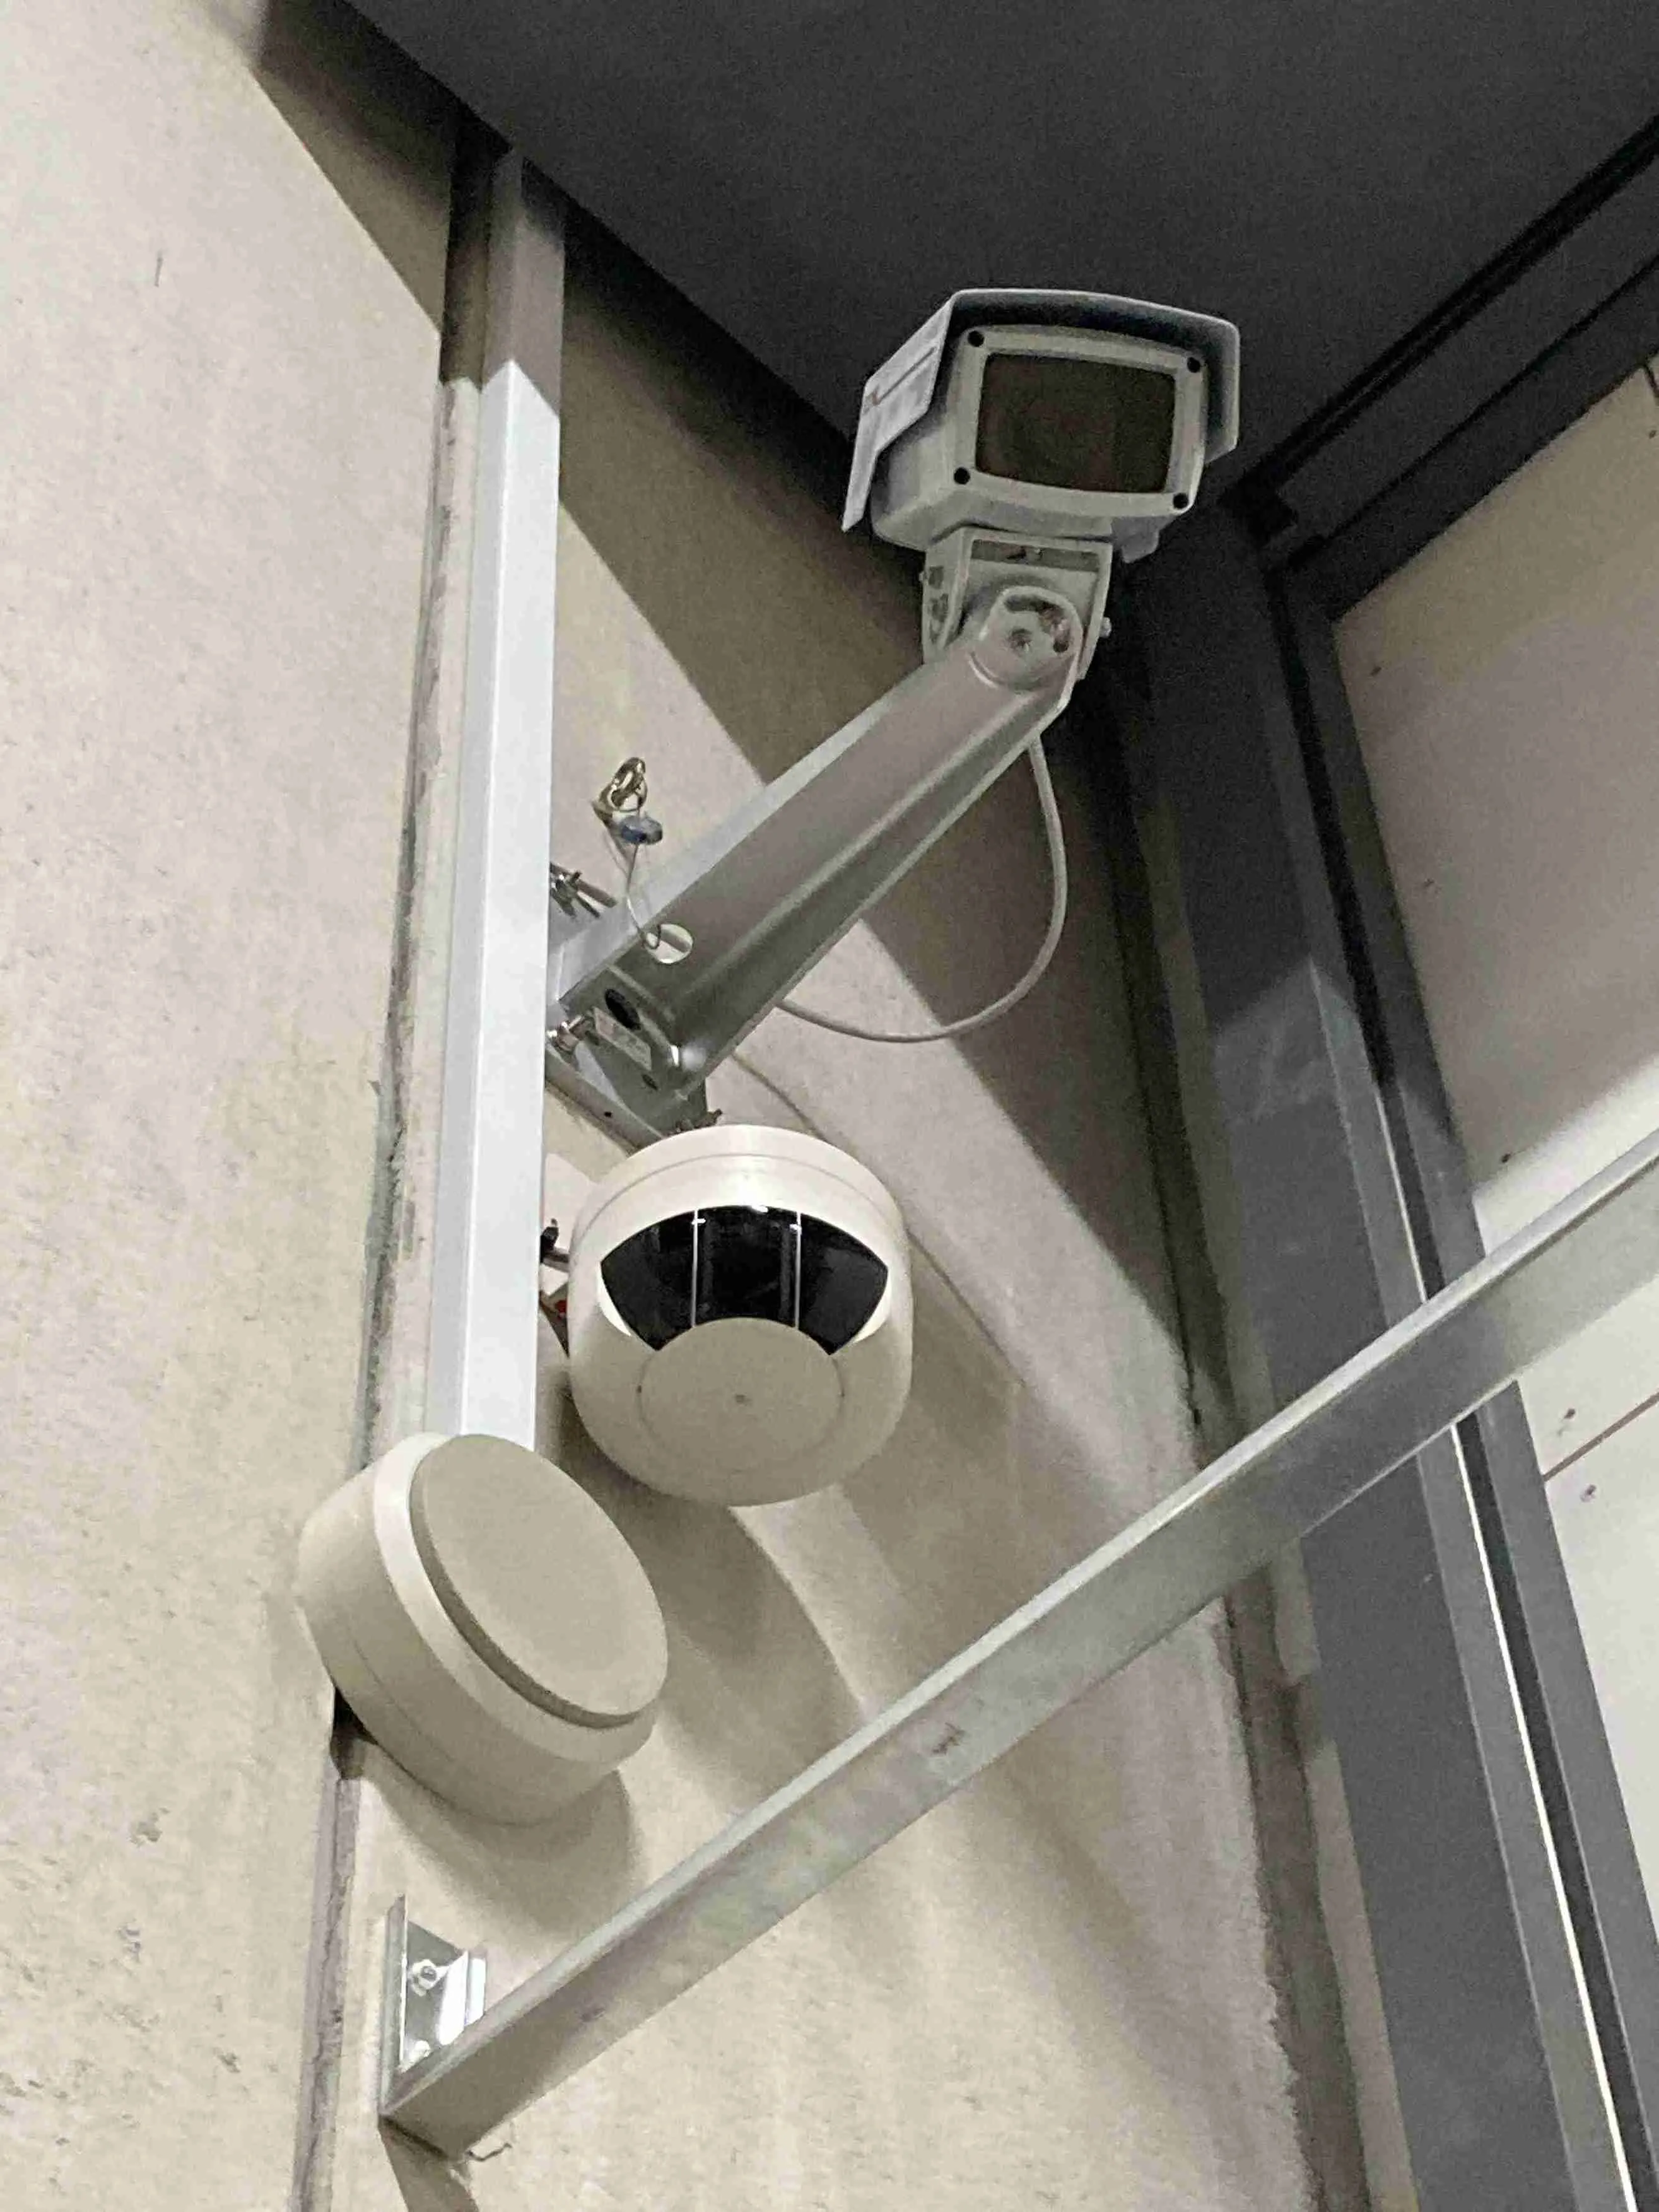 Mechanical security using surveillance cameras, human sensors, etc.